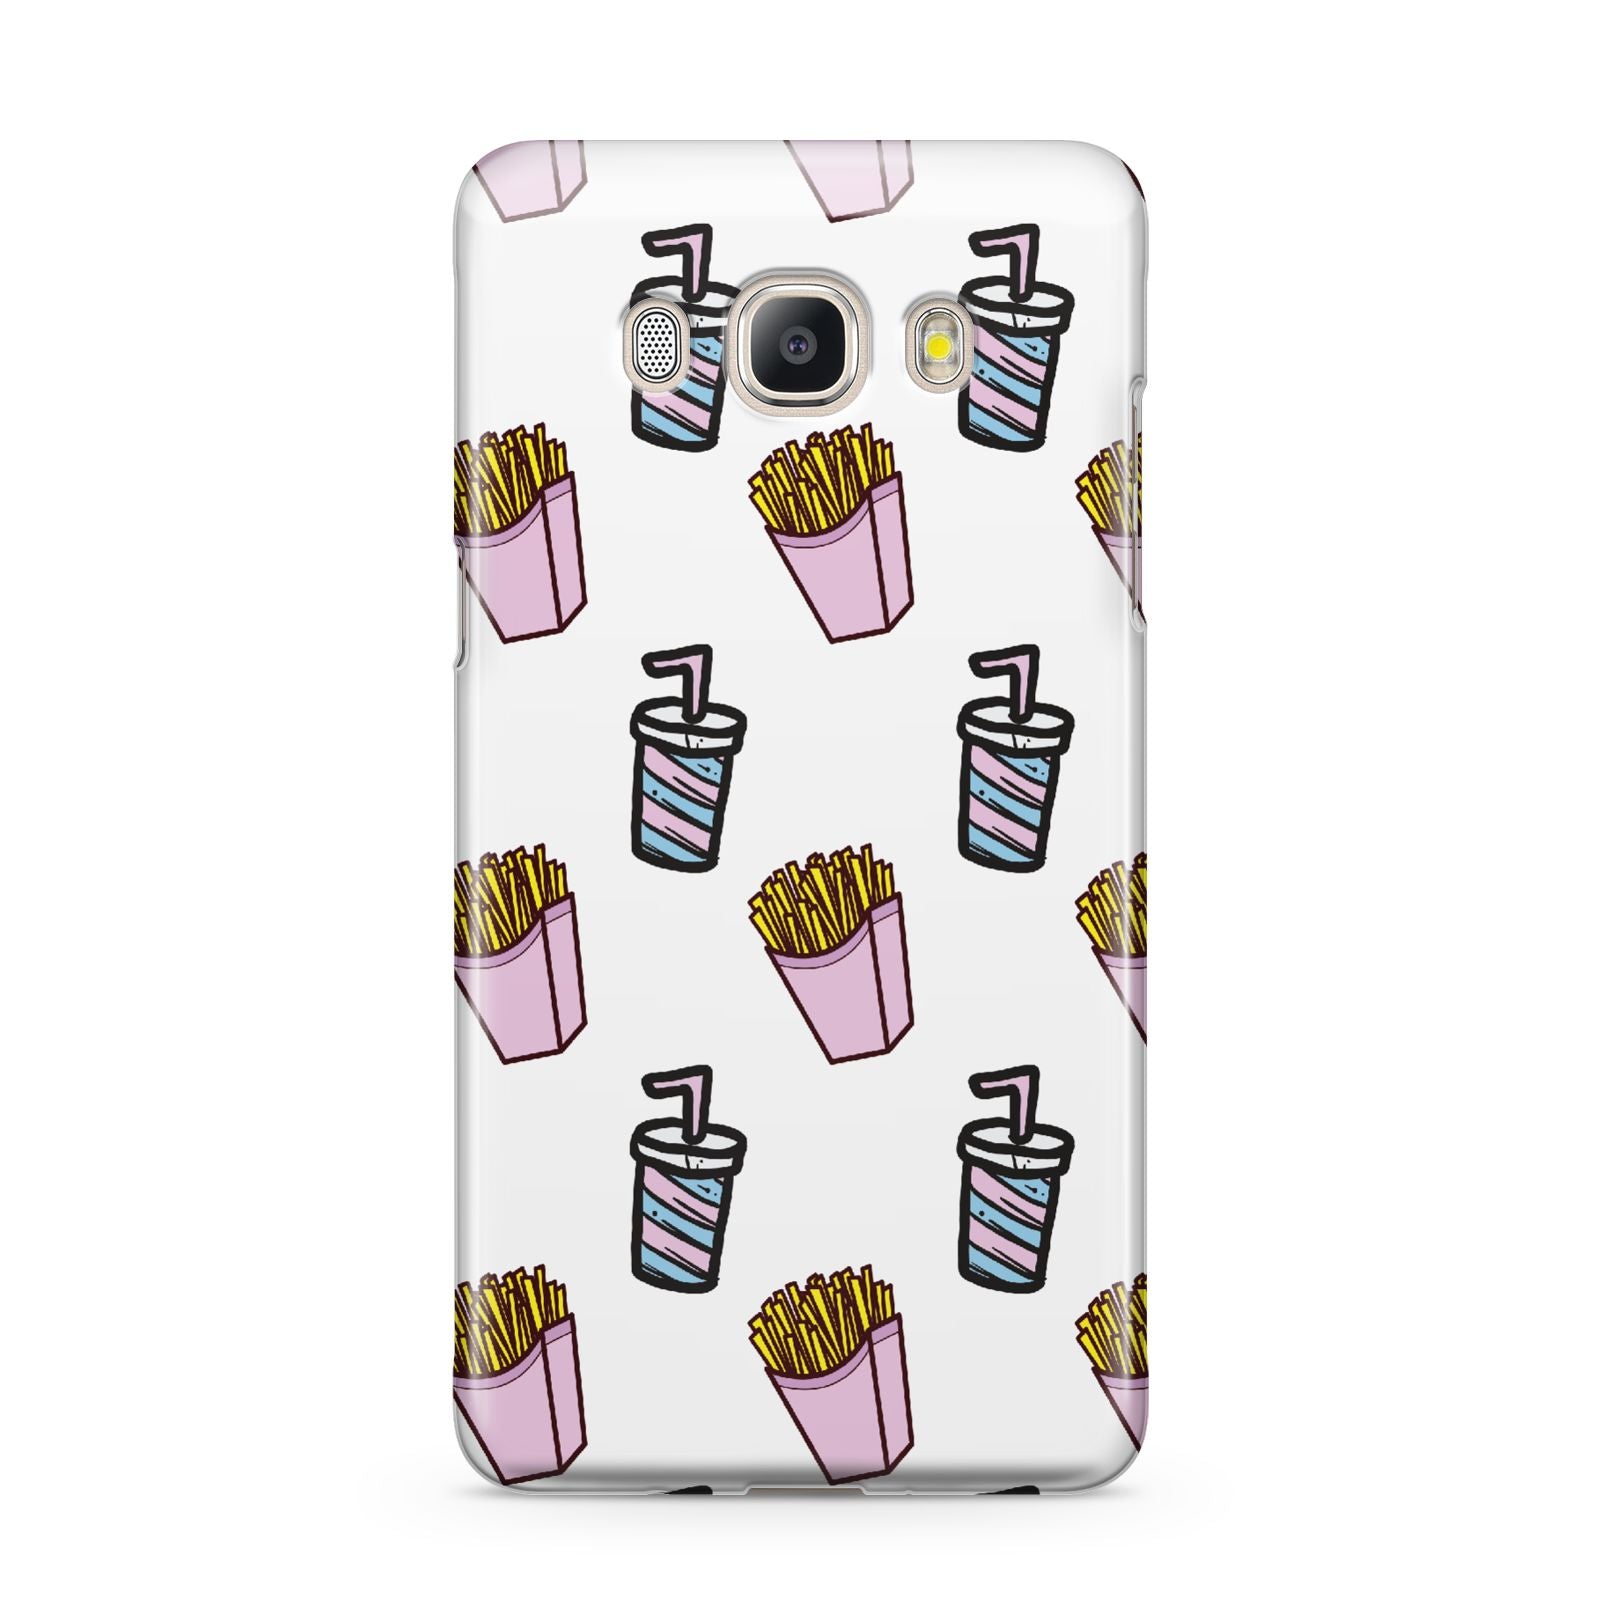 Fries Shake Fast Food Samsung Galaxy J5 2016 Case